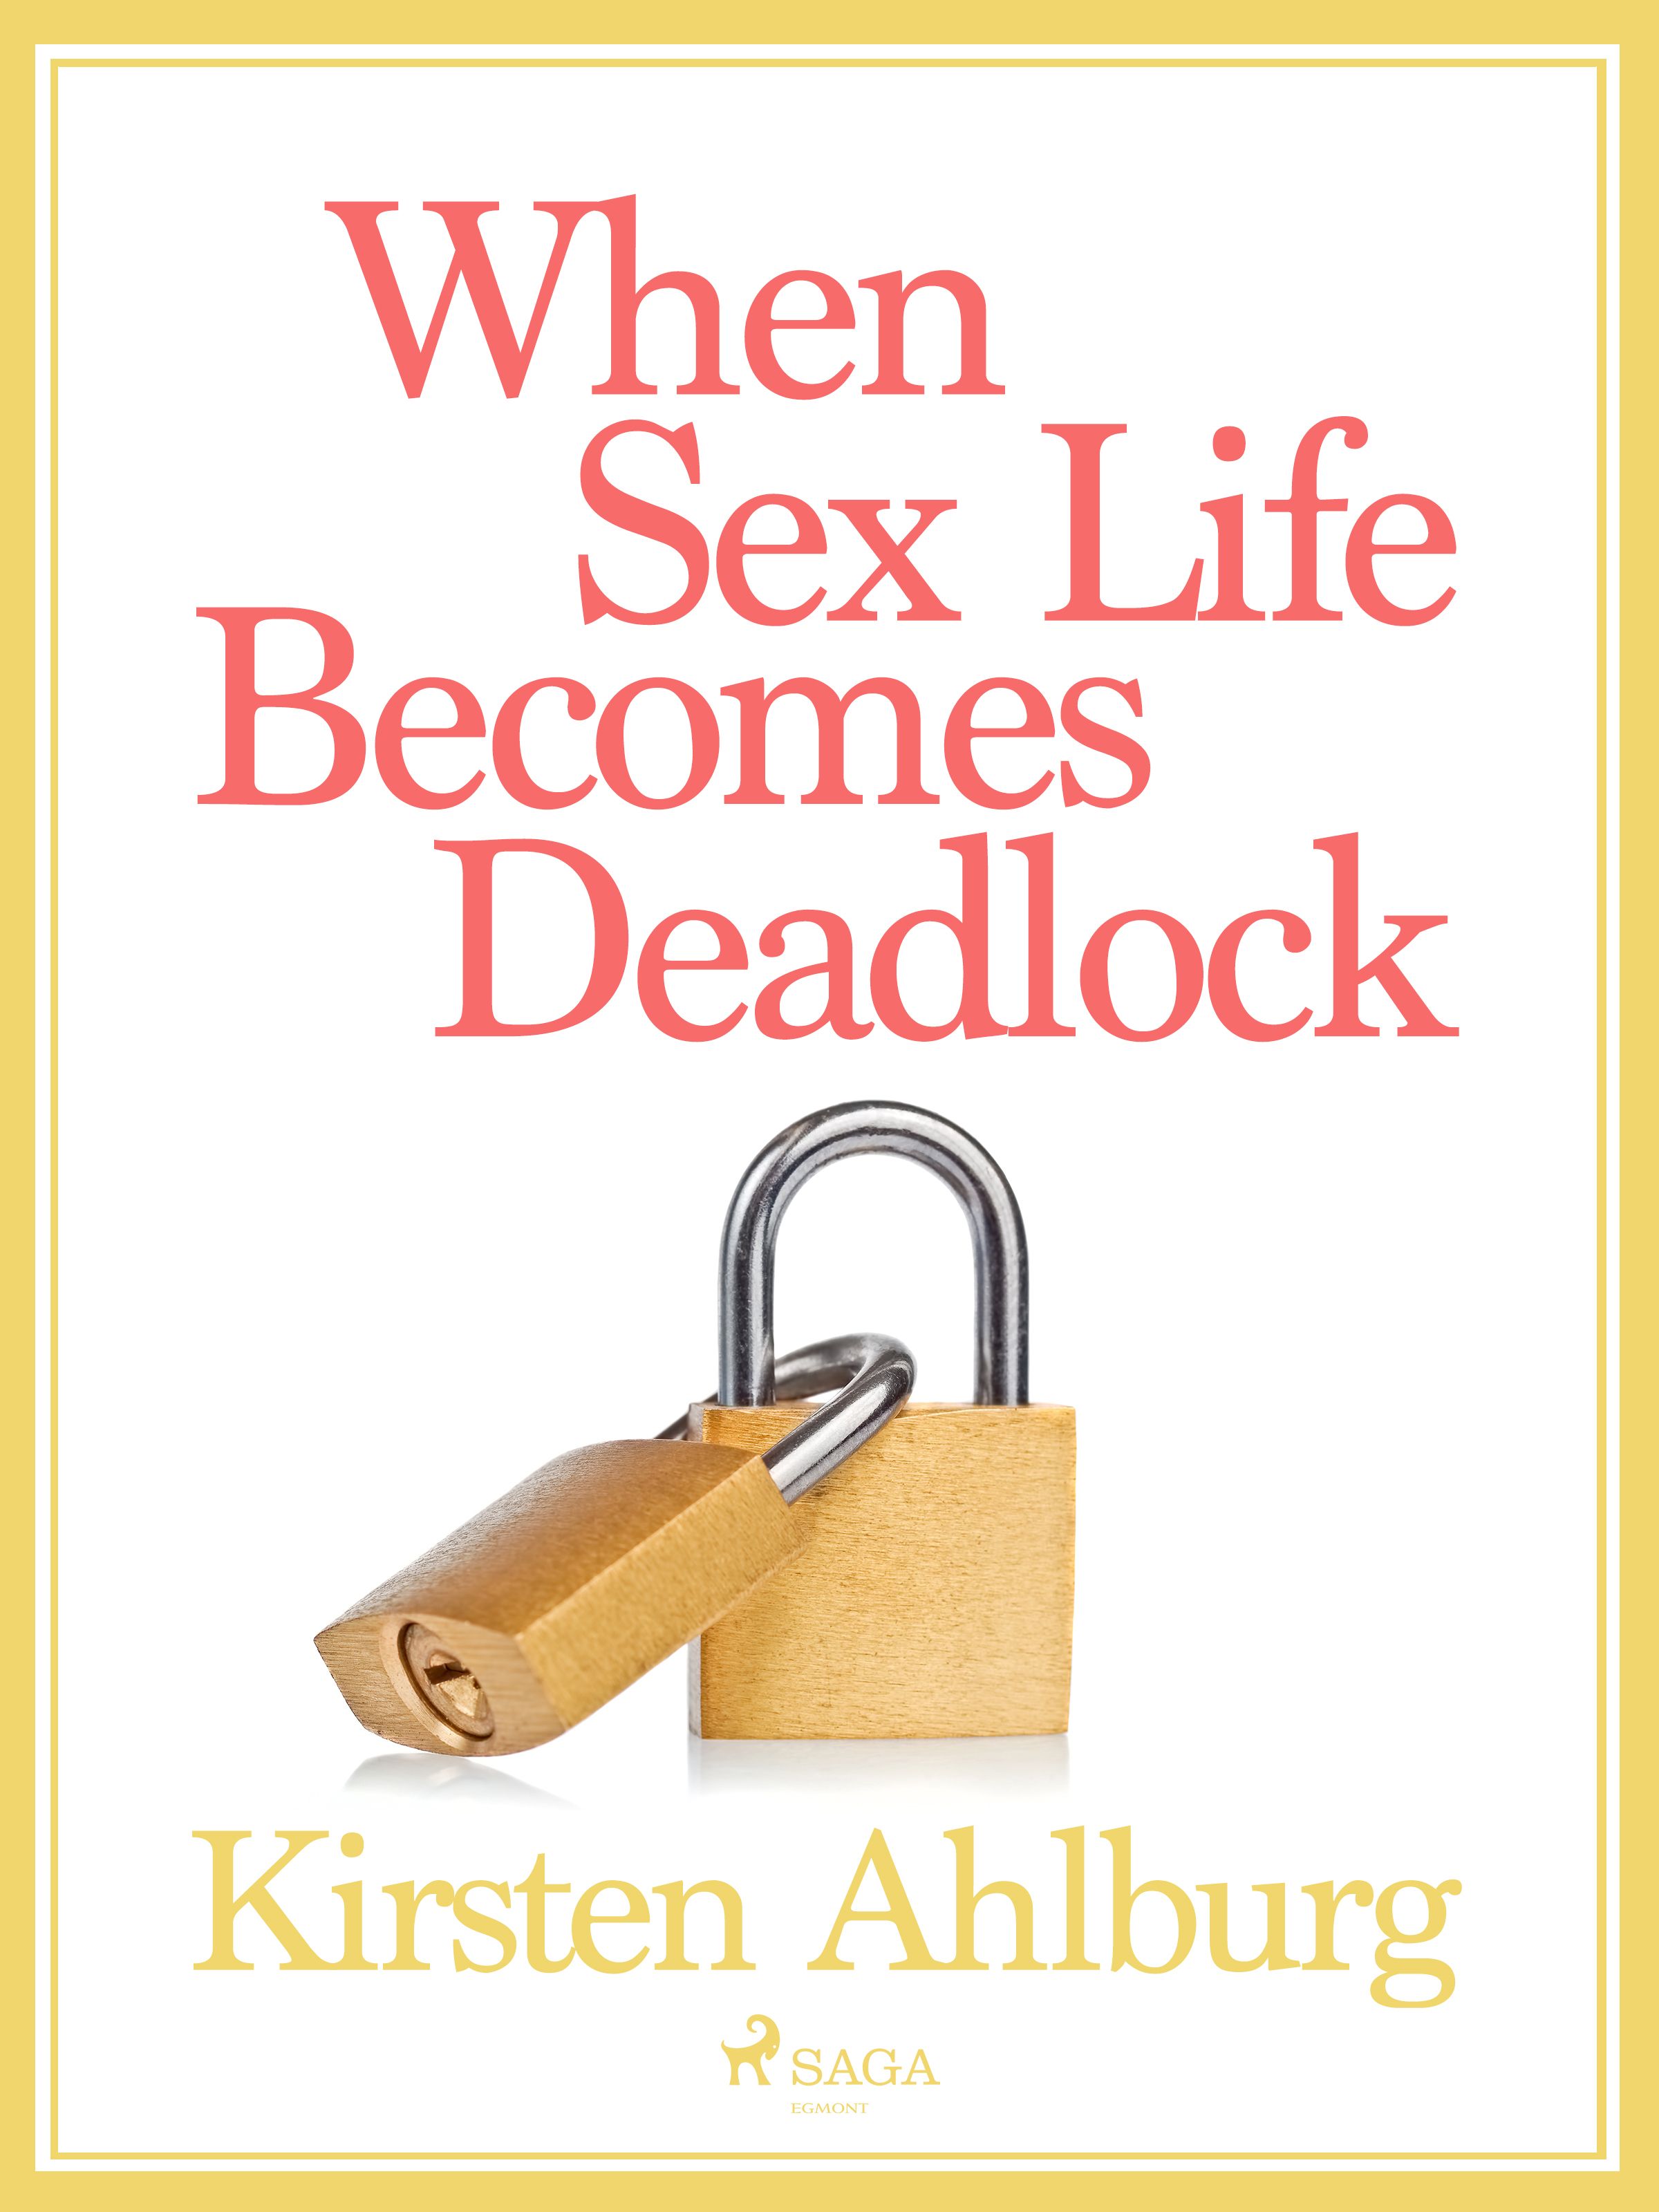 When Sex Life Becomes Deadlock, eBook by Kirsten Ahlburg